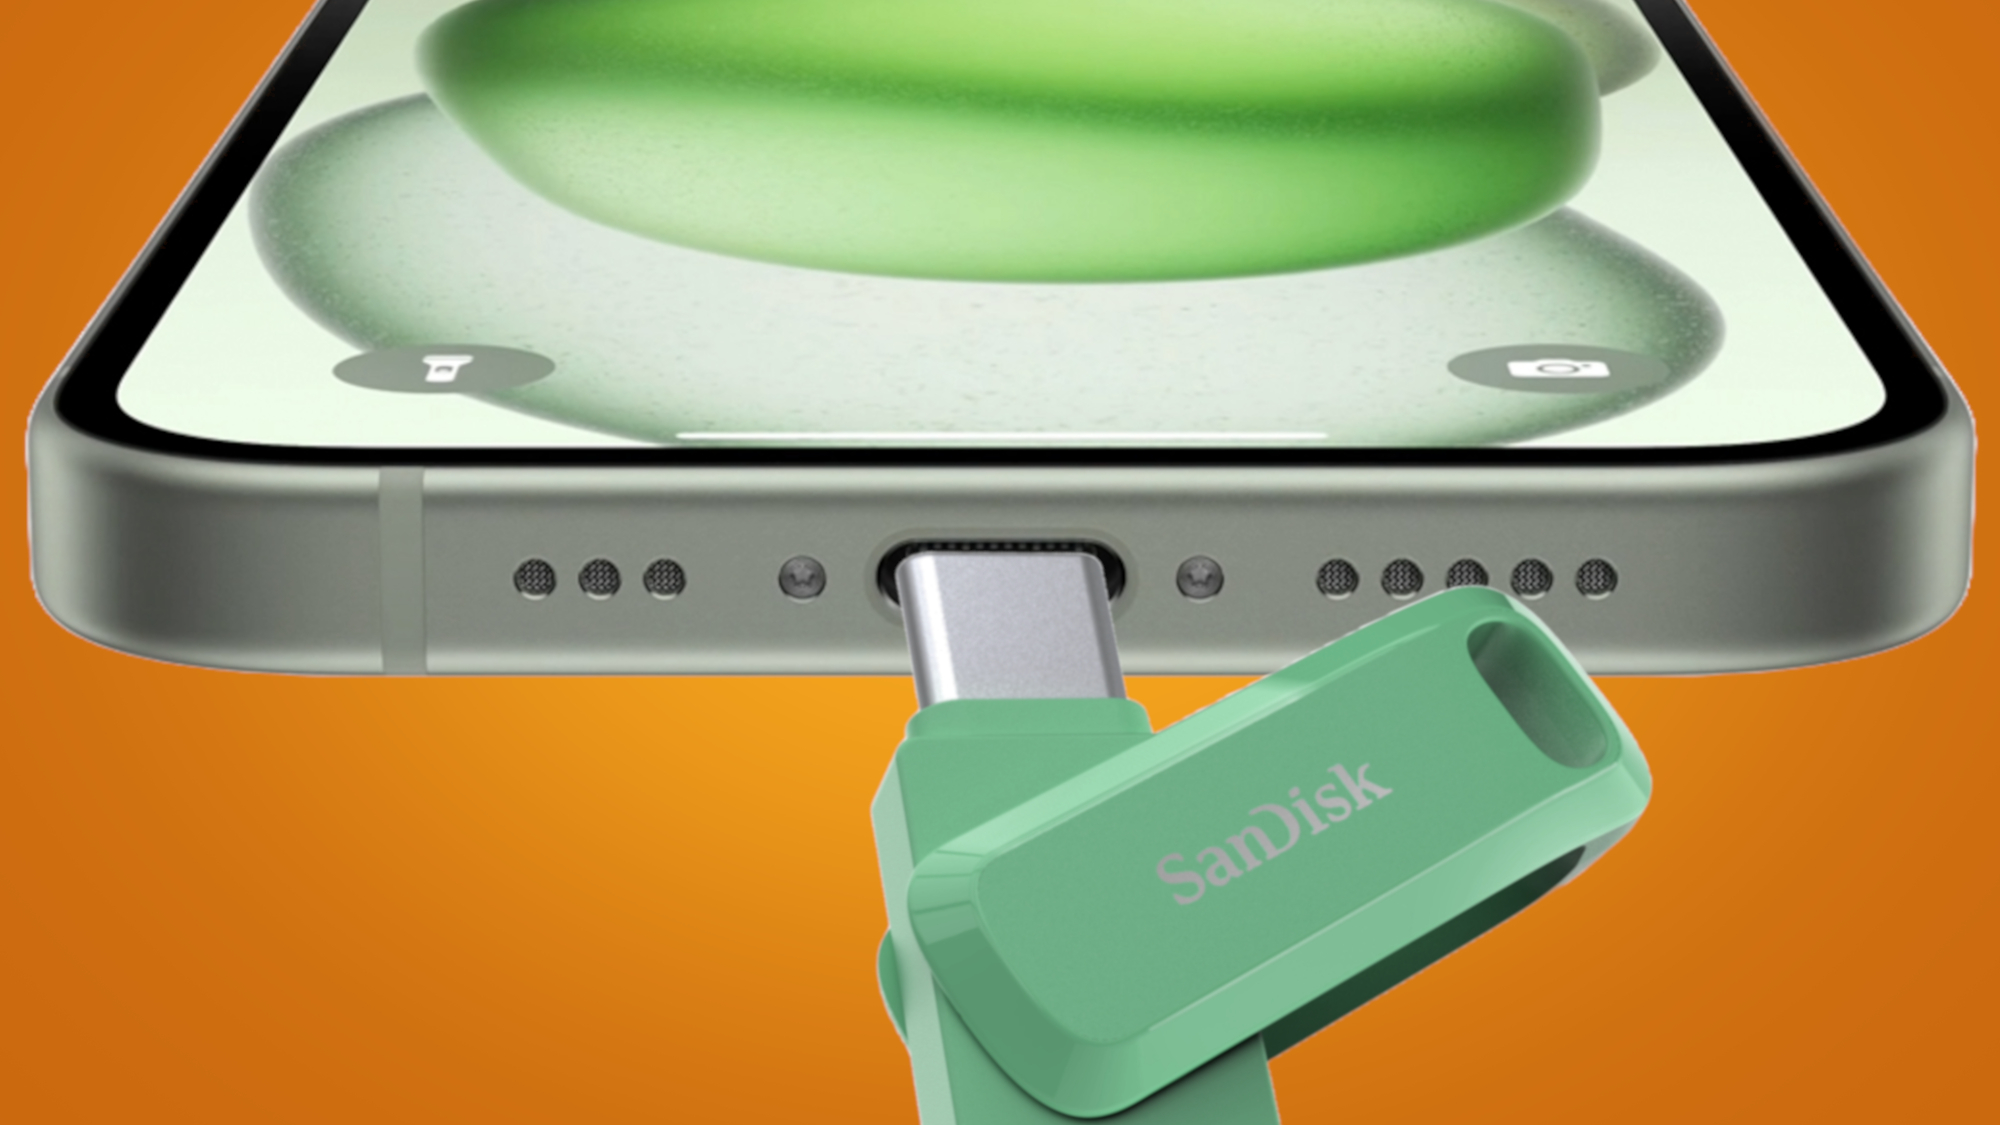 SanDisk's 256GB Go USB-C/A Flash Drive hits  low